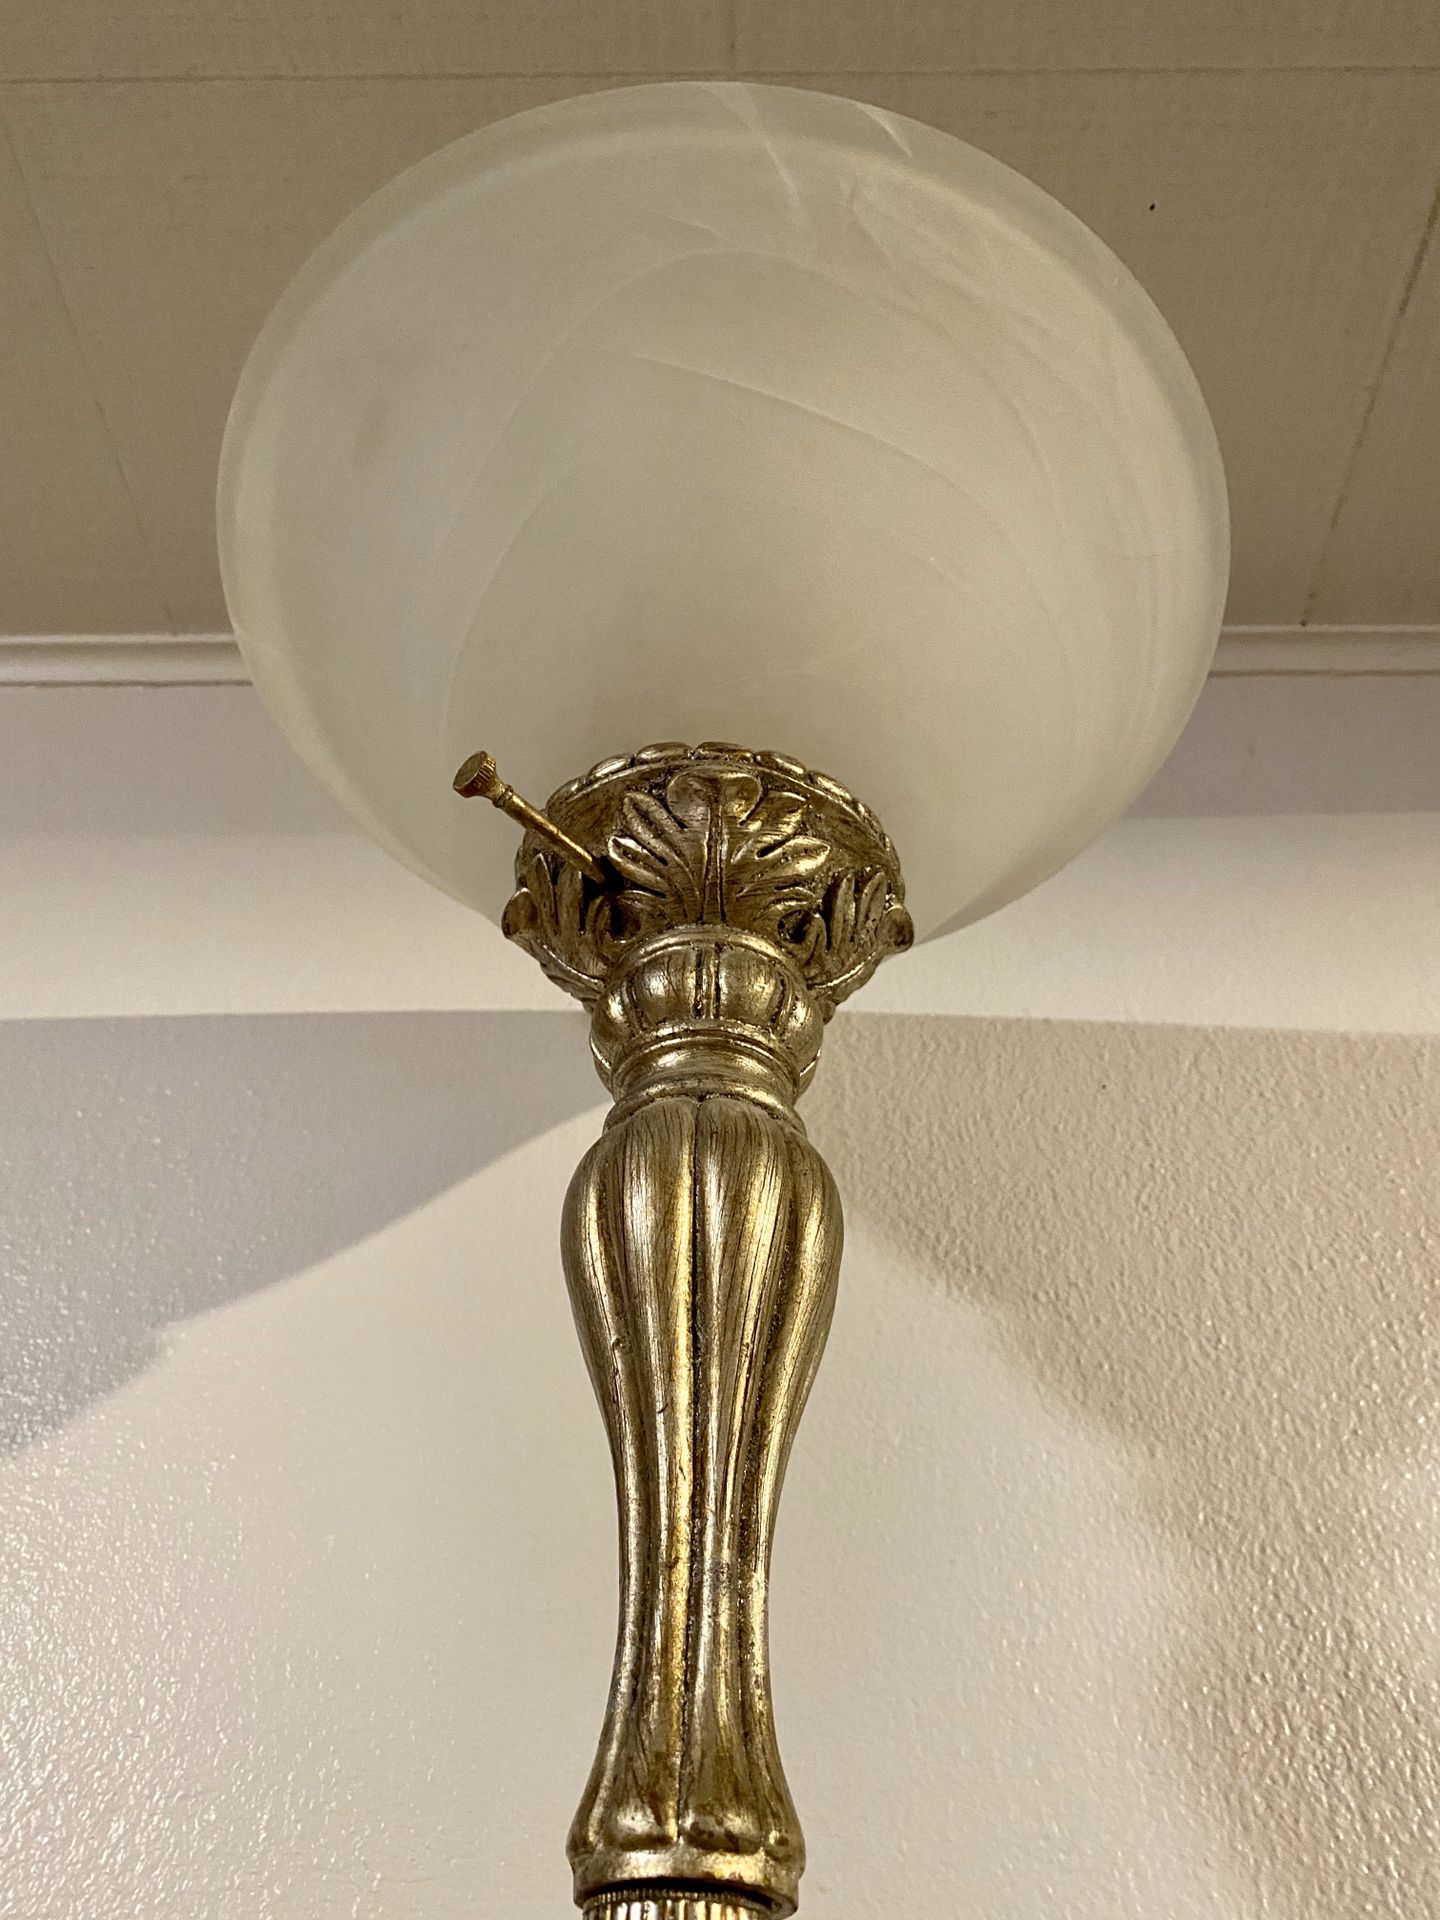 Antique Style Lamp